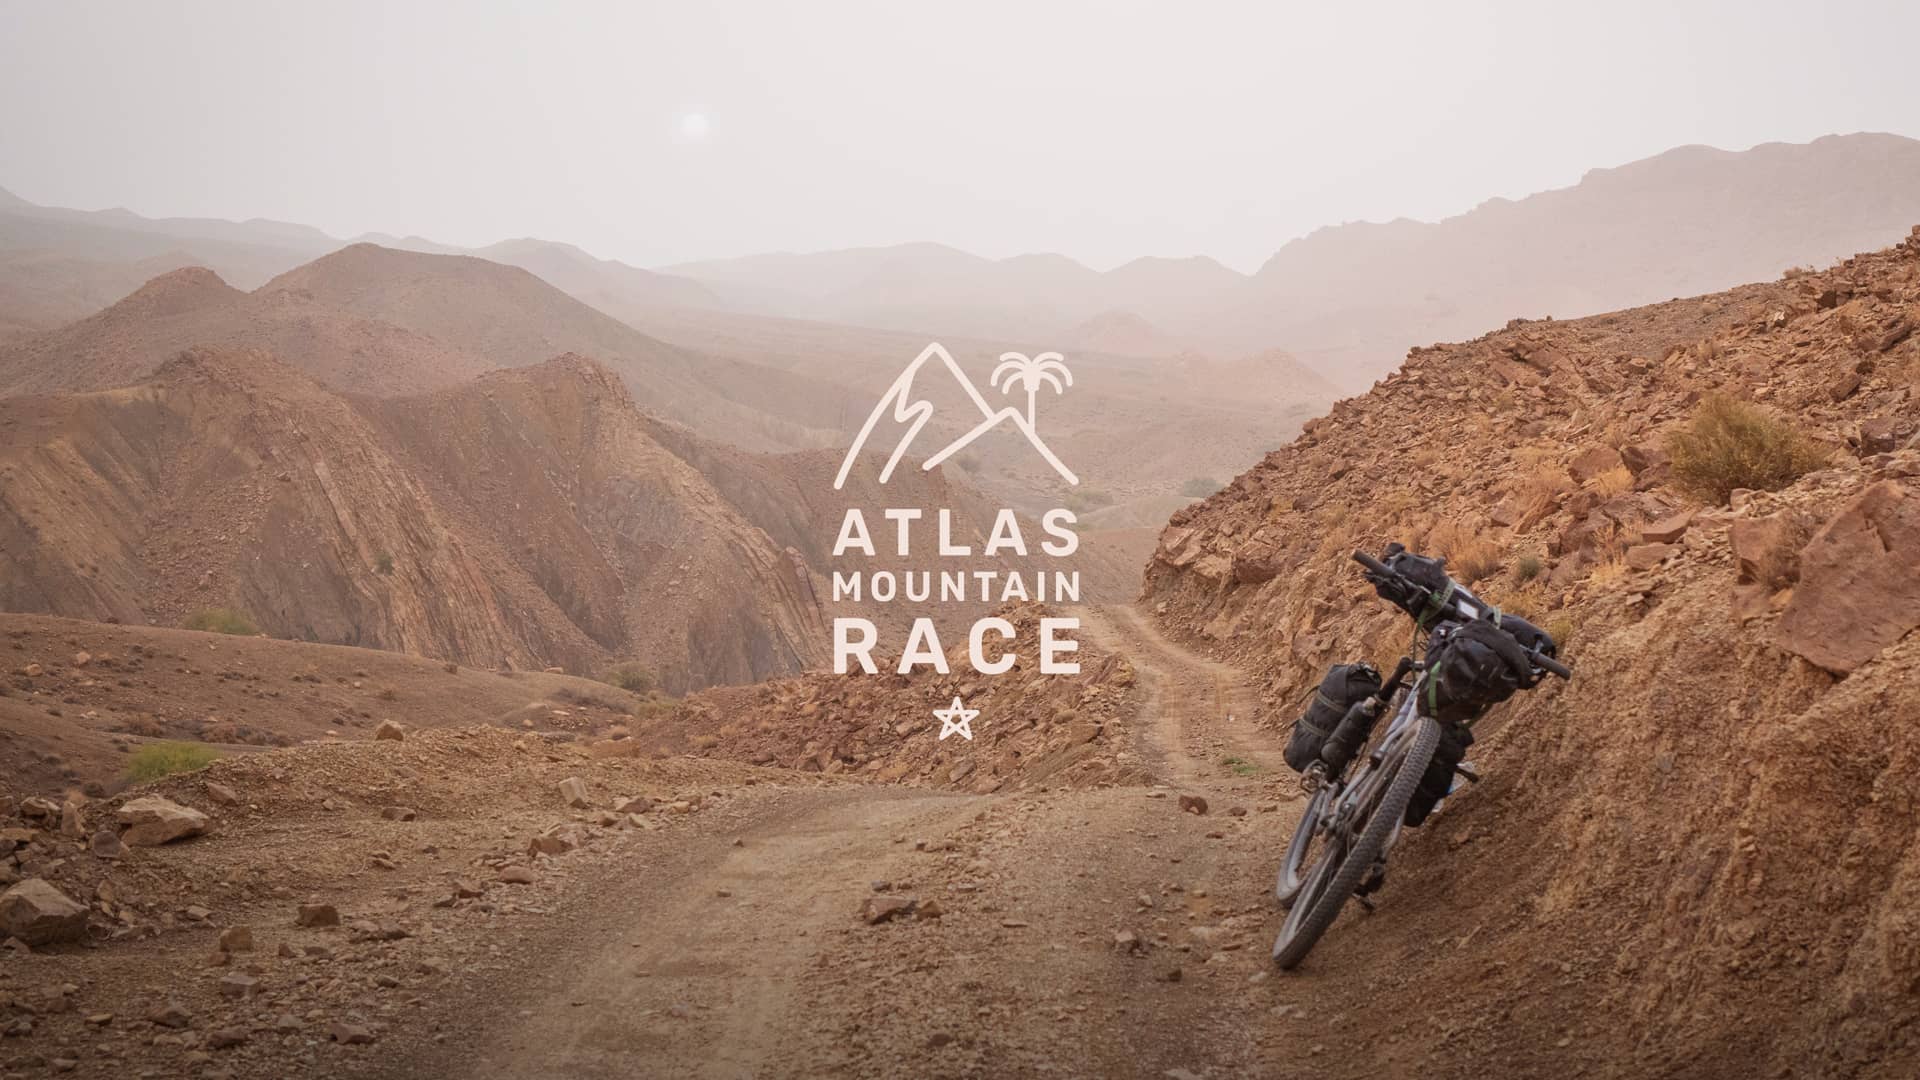 ATLAS MOUNTAIN RACE // Bikepacking Morocco on Vimeo